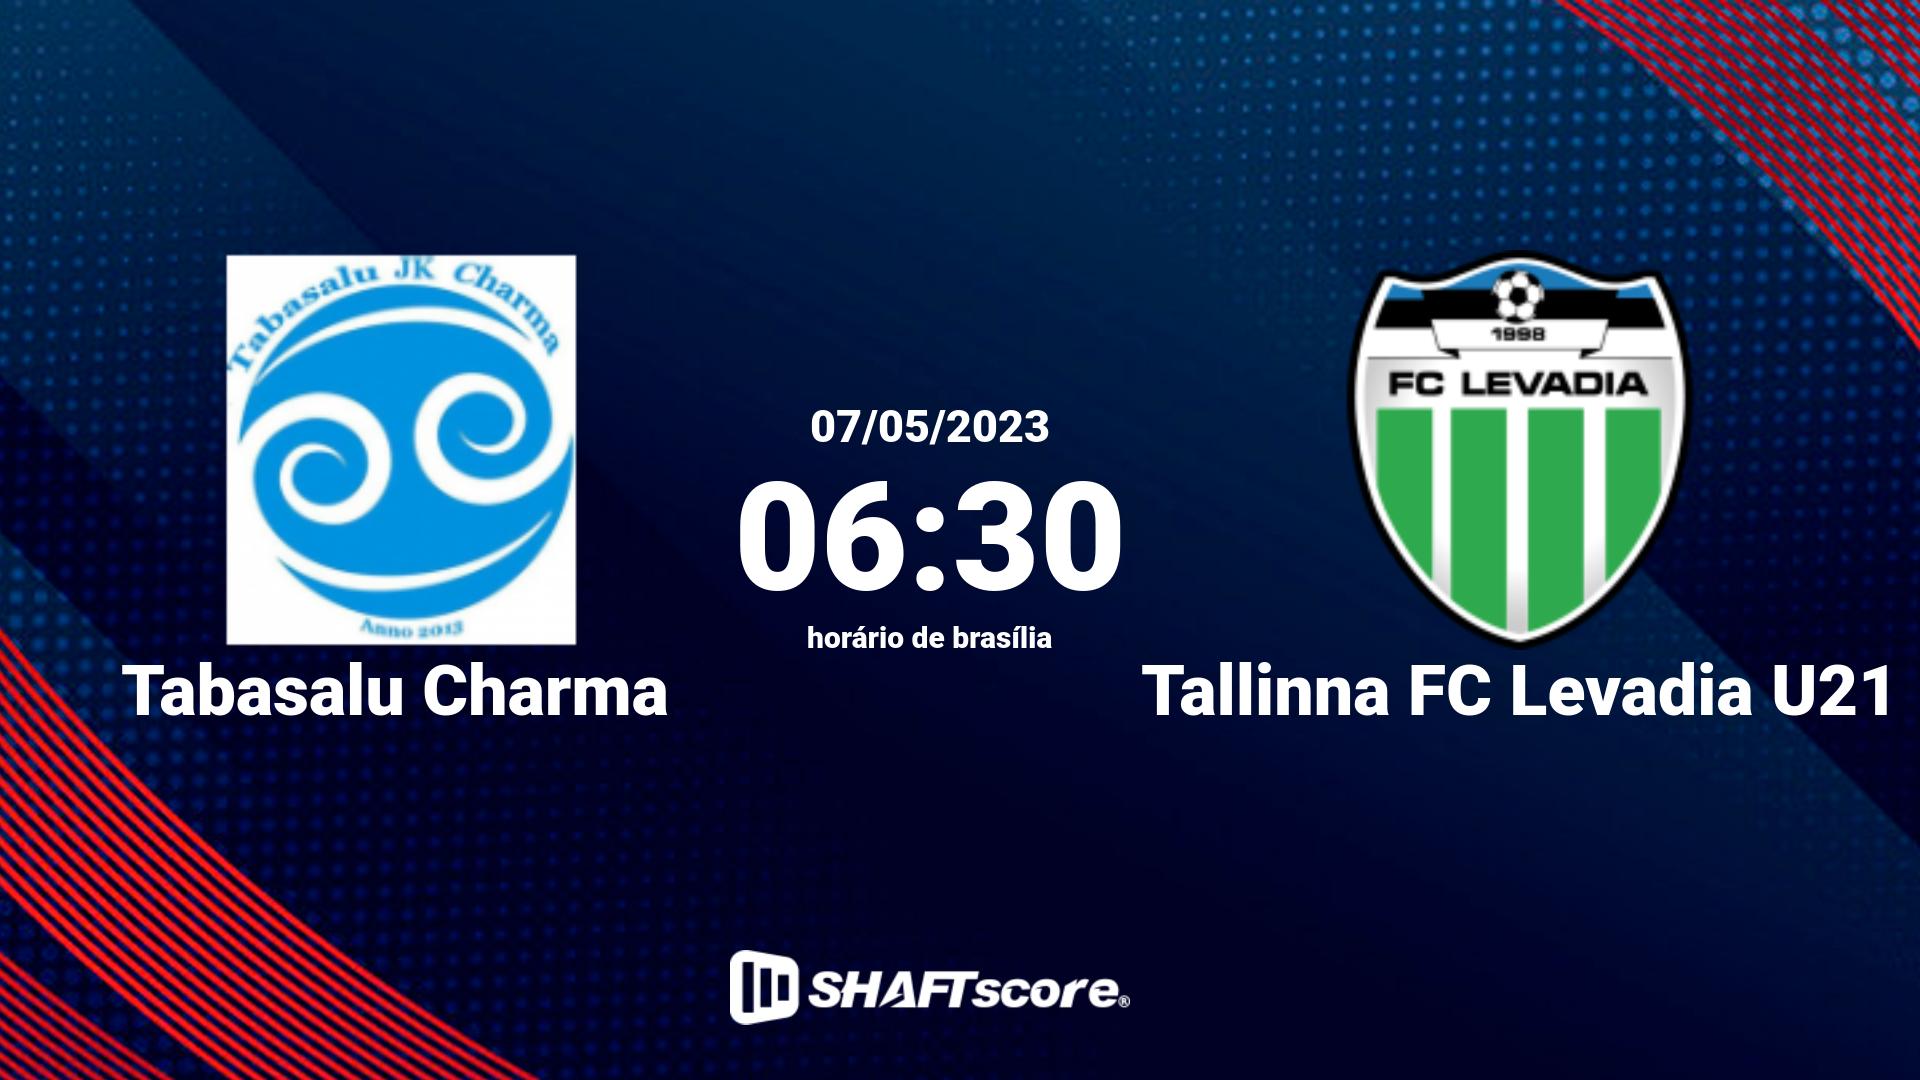 Estatísticas do jogo Tabasalu Charma vs Tallinna FC Levadia U21 07.05 06:30